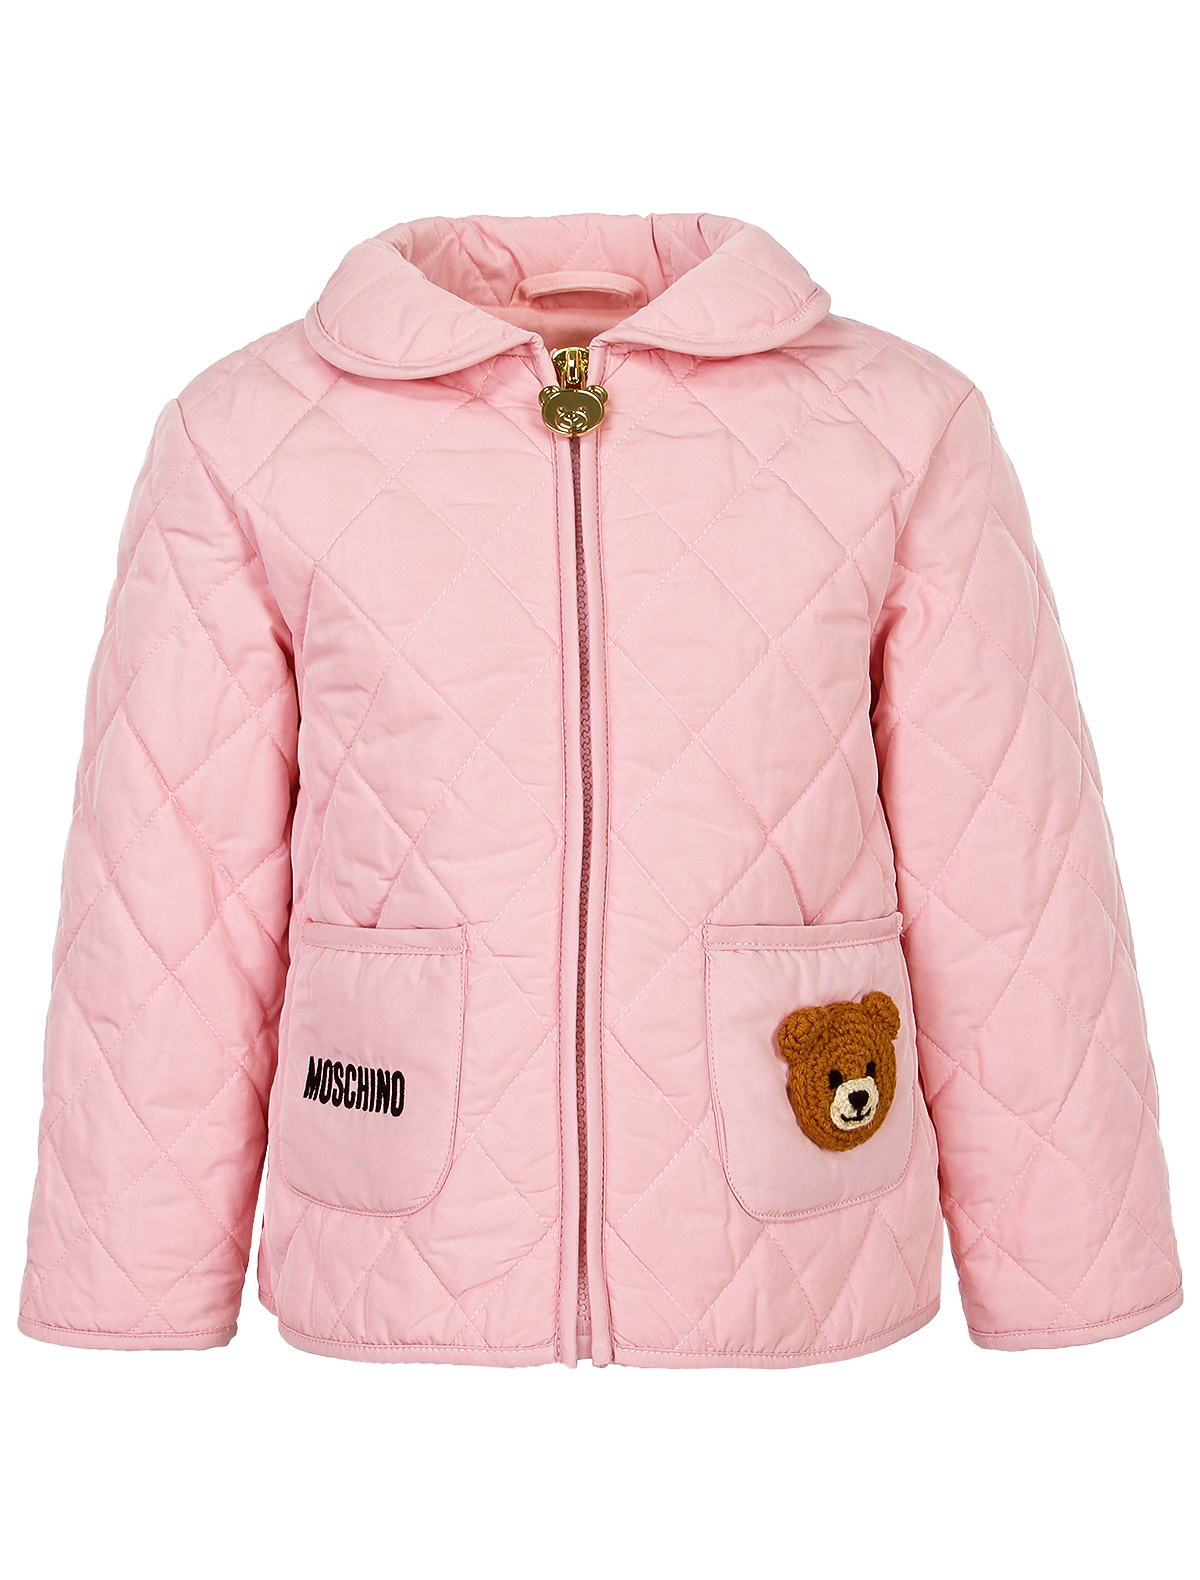 Куртка Moschino 2543935, цвет розовый, размер 2 1074509371649 - фото 3